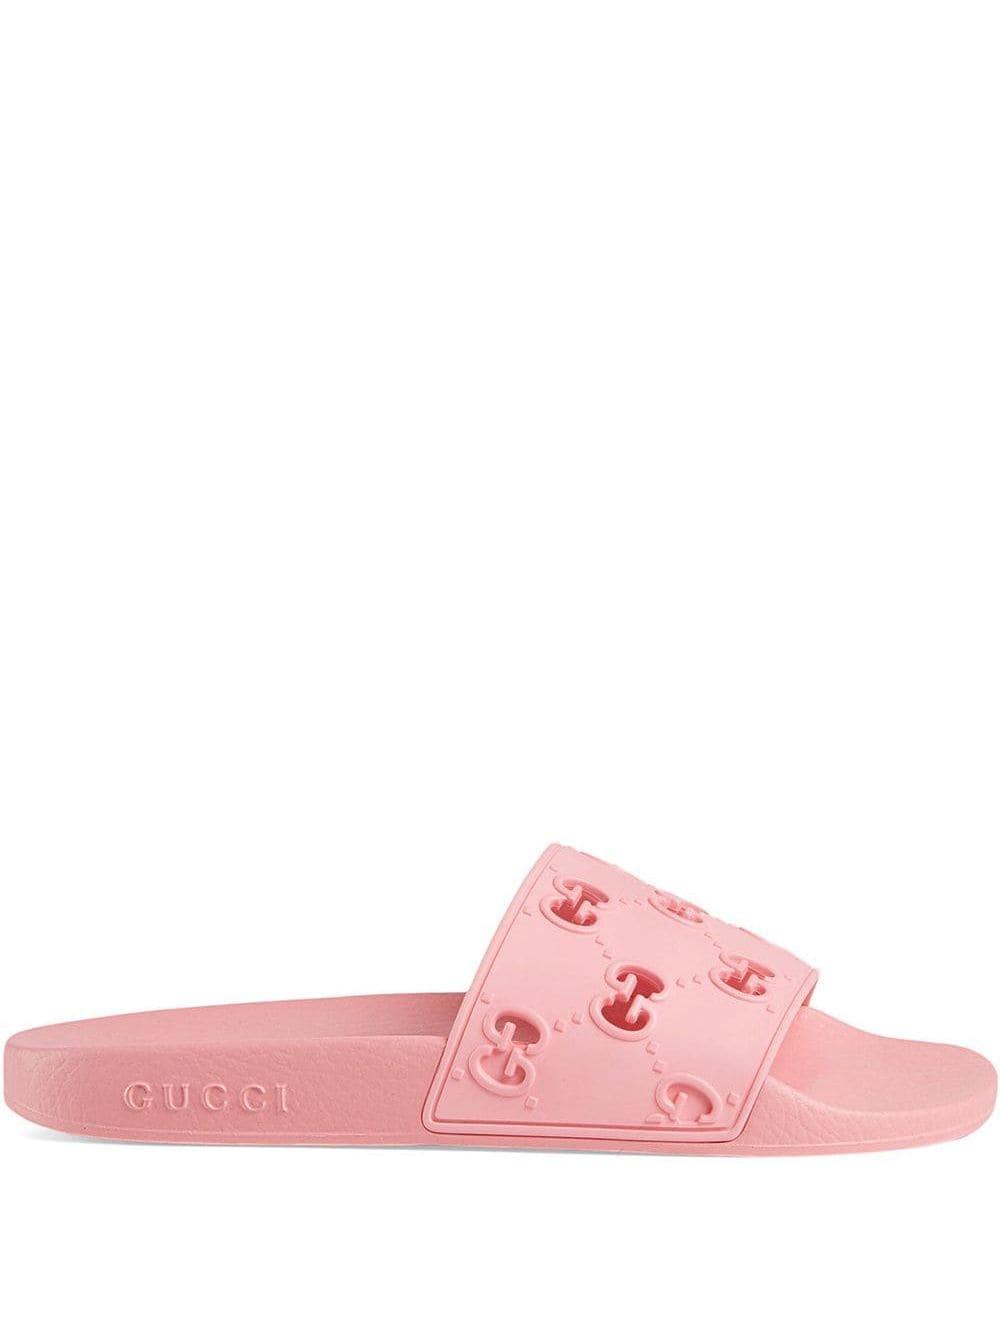 Gucci Rubber Pink GG Logo Slides - Save 27% - Lyst